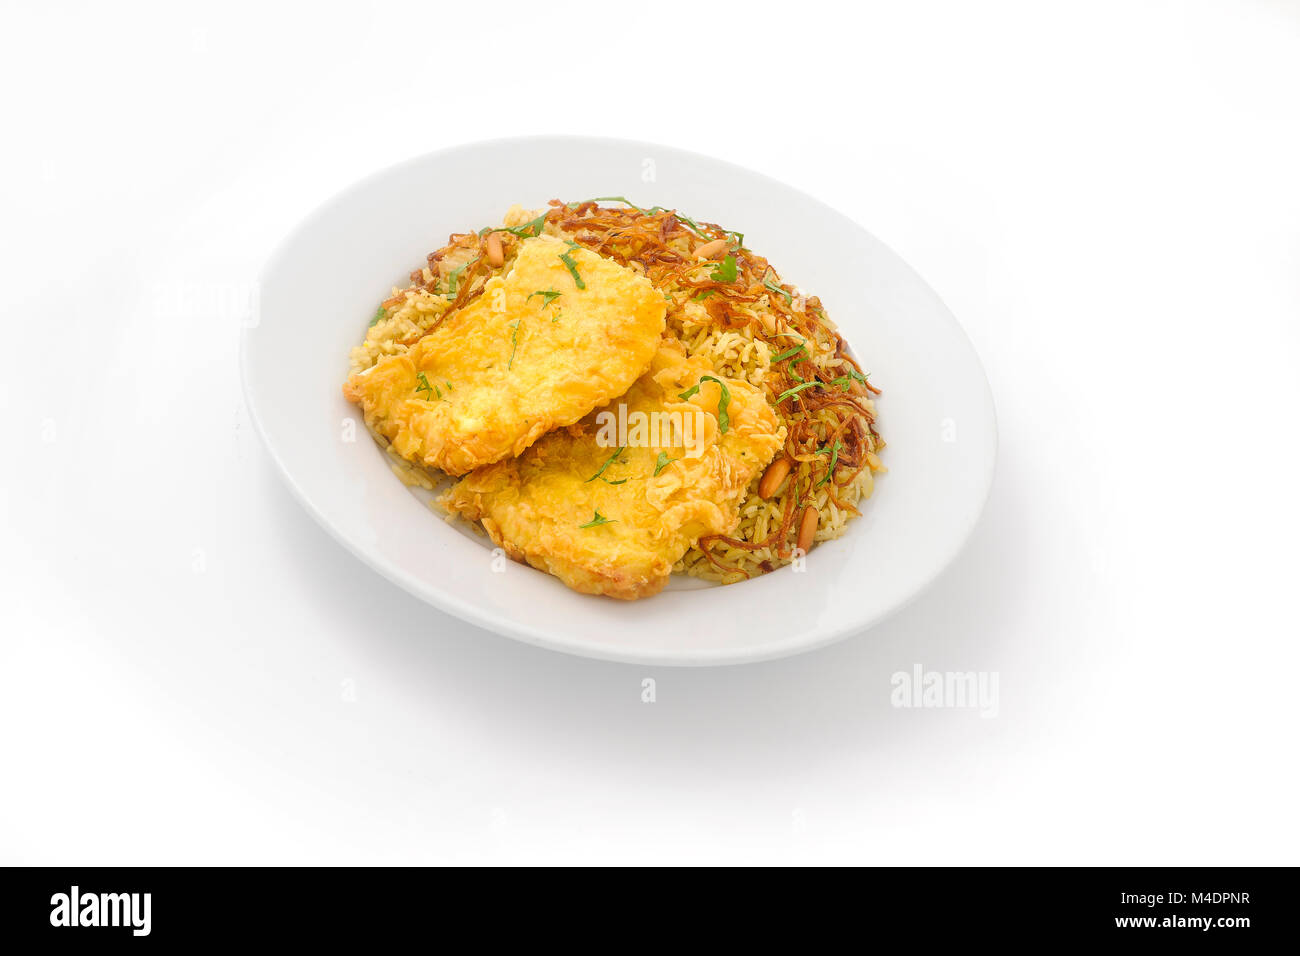 fried fish filet on rice Stock Photo